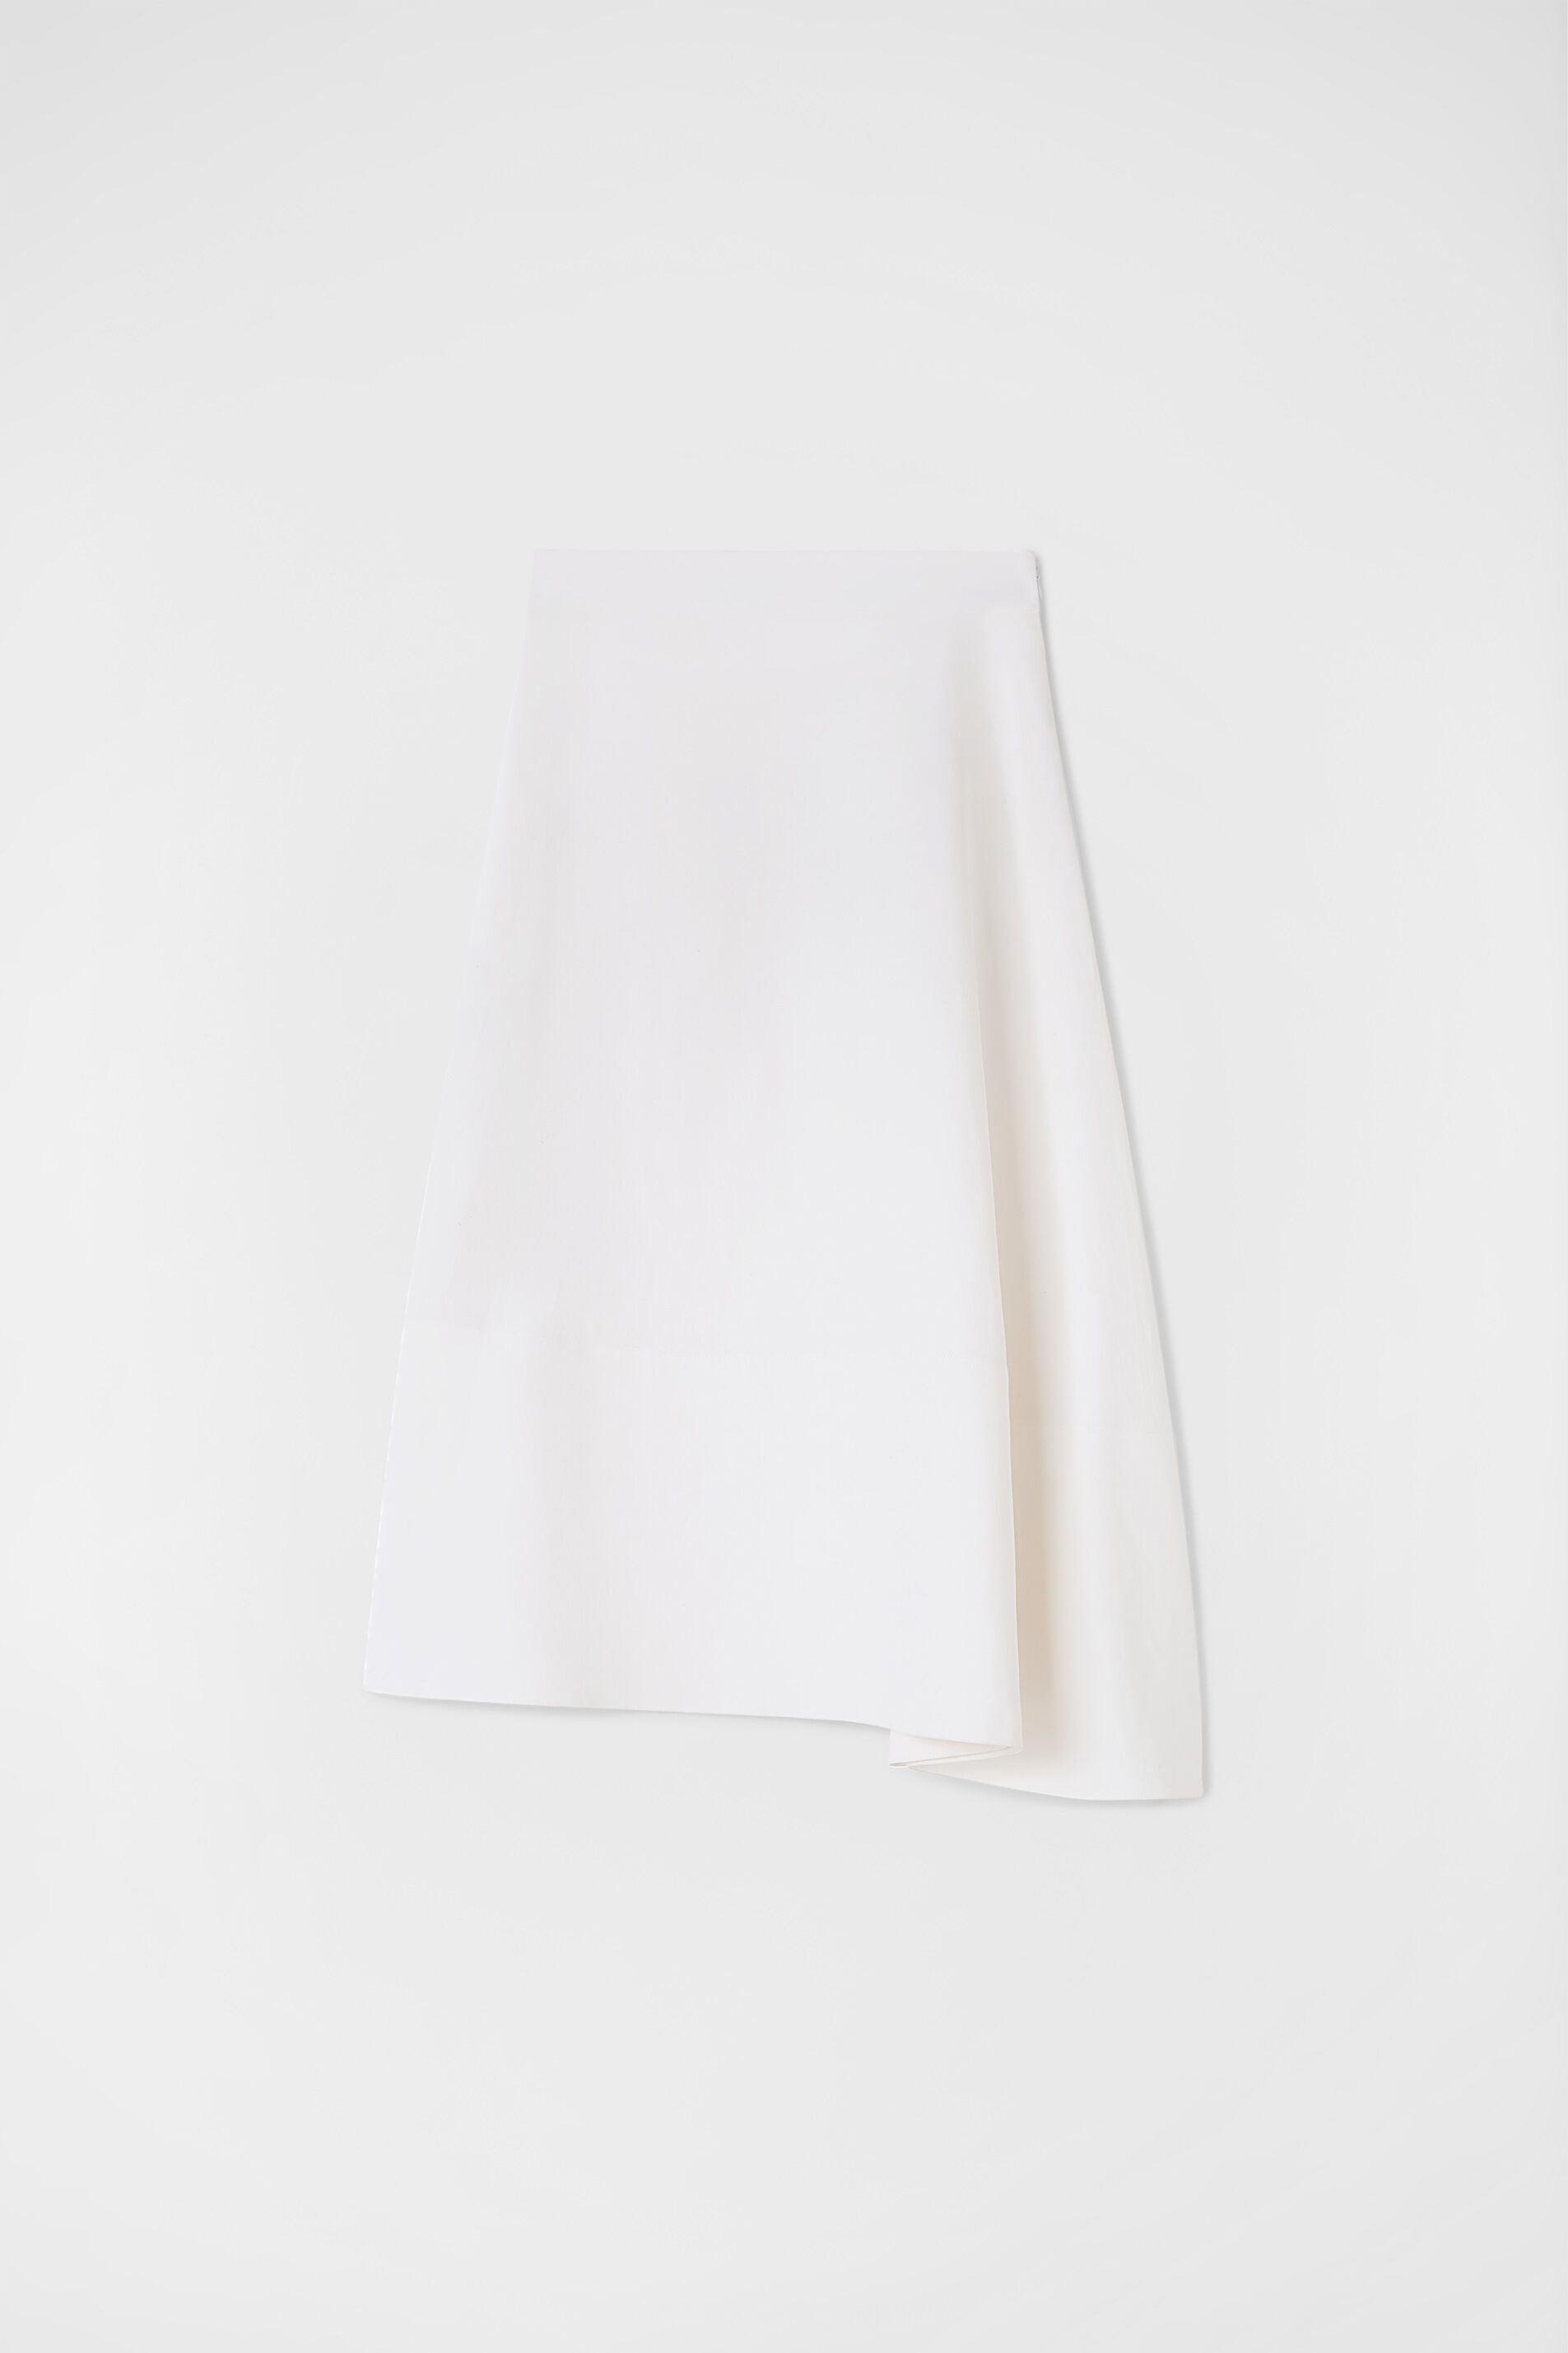 Asymmetrical Skirt - 1